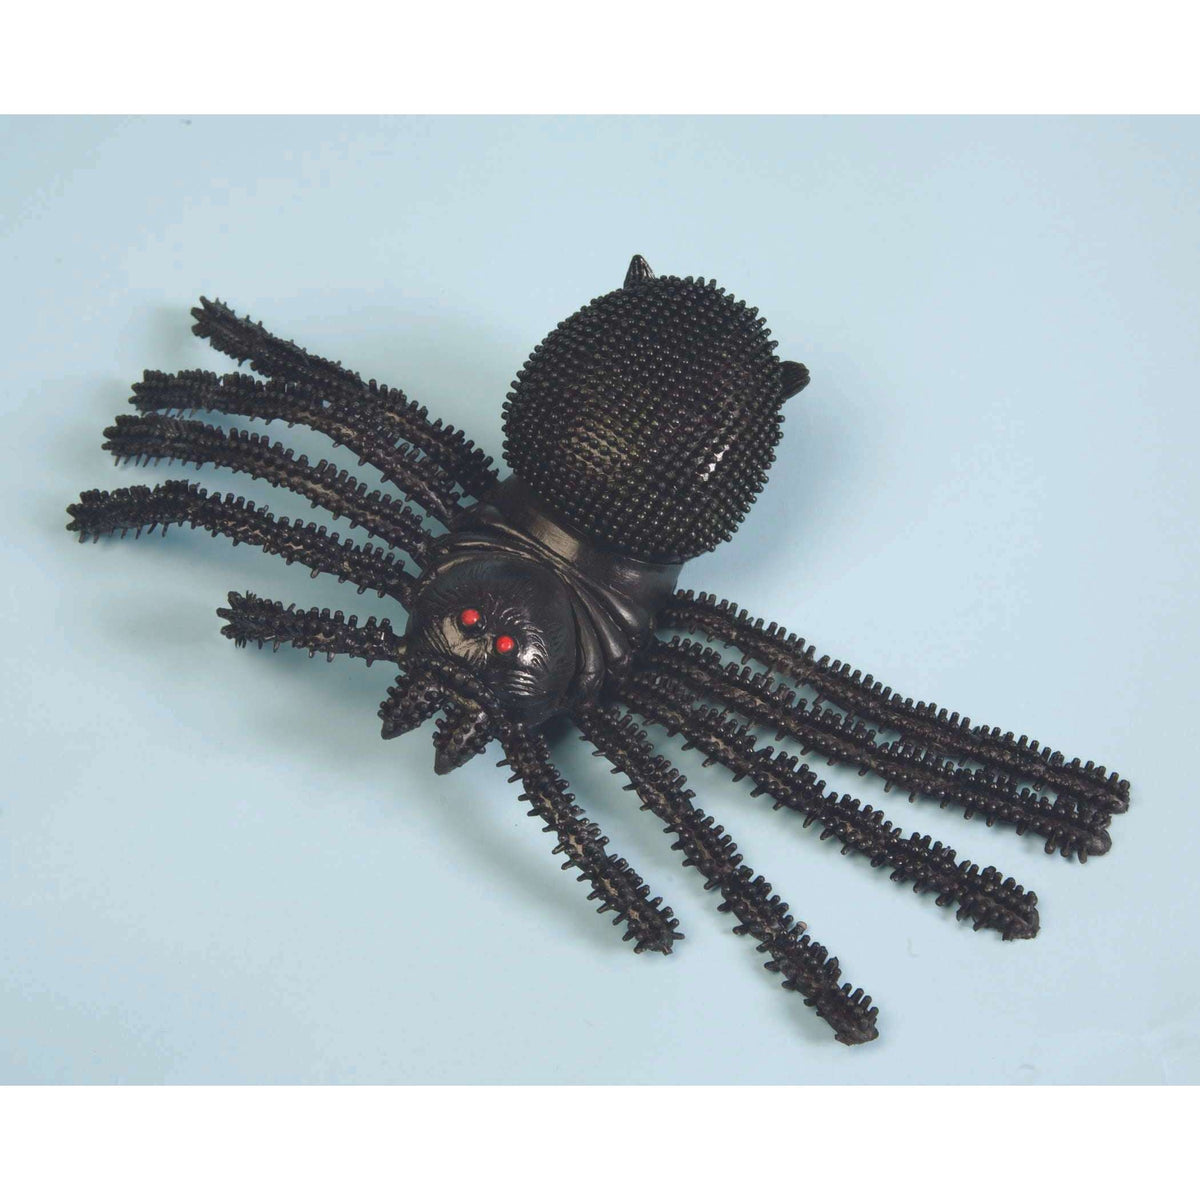 10 Inch Black Tarantula with Hanging Legs